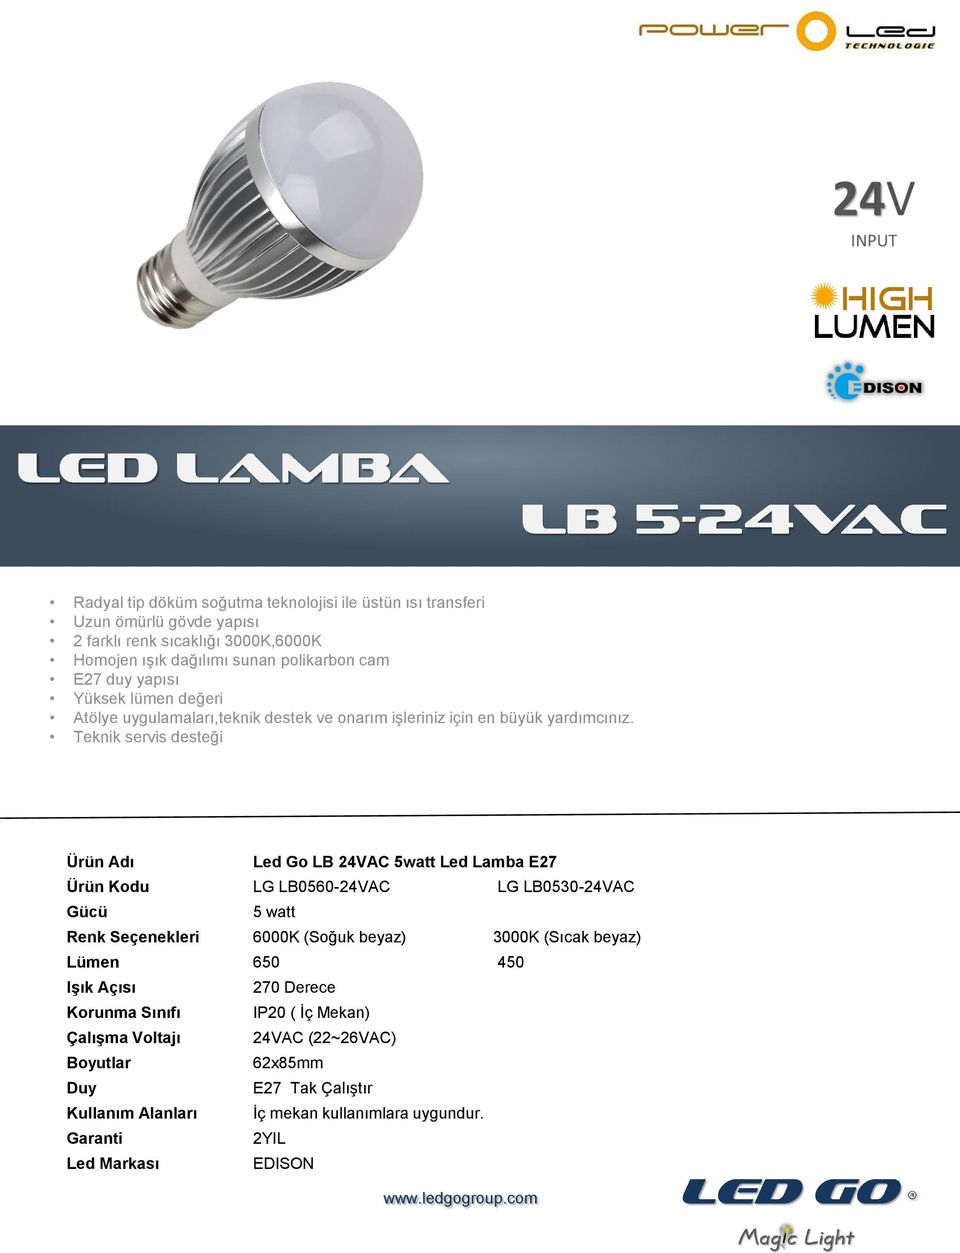 Teknik servis desteği Led Go LB 24VAC 5watt Led Lamba E27 Ürün Kodu LG LB0560-24VAC LG LB0530-24VAC 5 watt Renk Seçenekleri 6000K (Soğuk beyaz) 3000K (Sıcak beyaz)